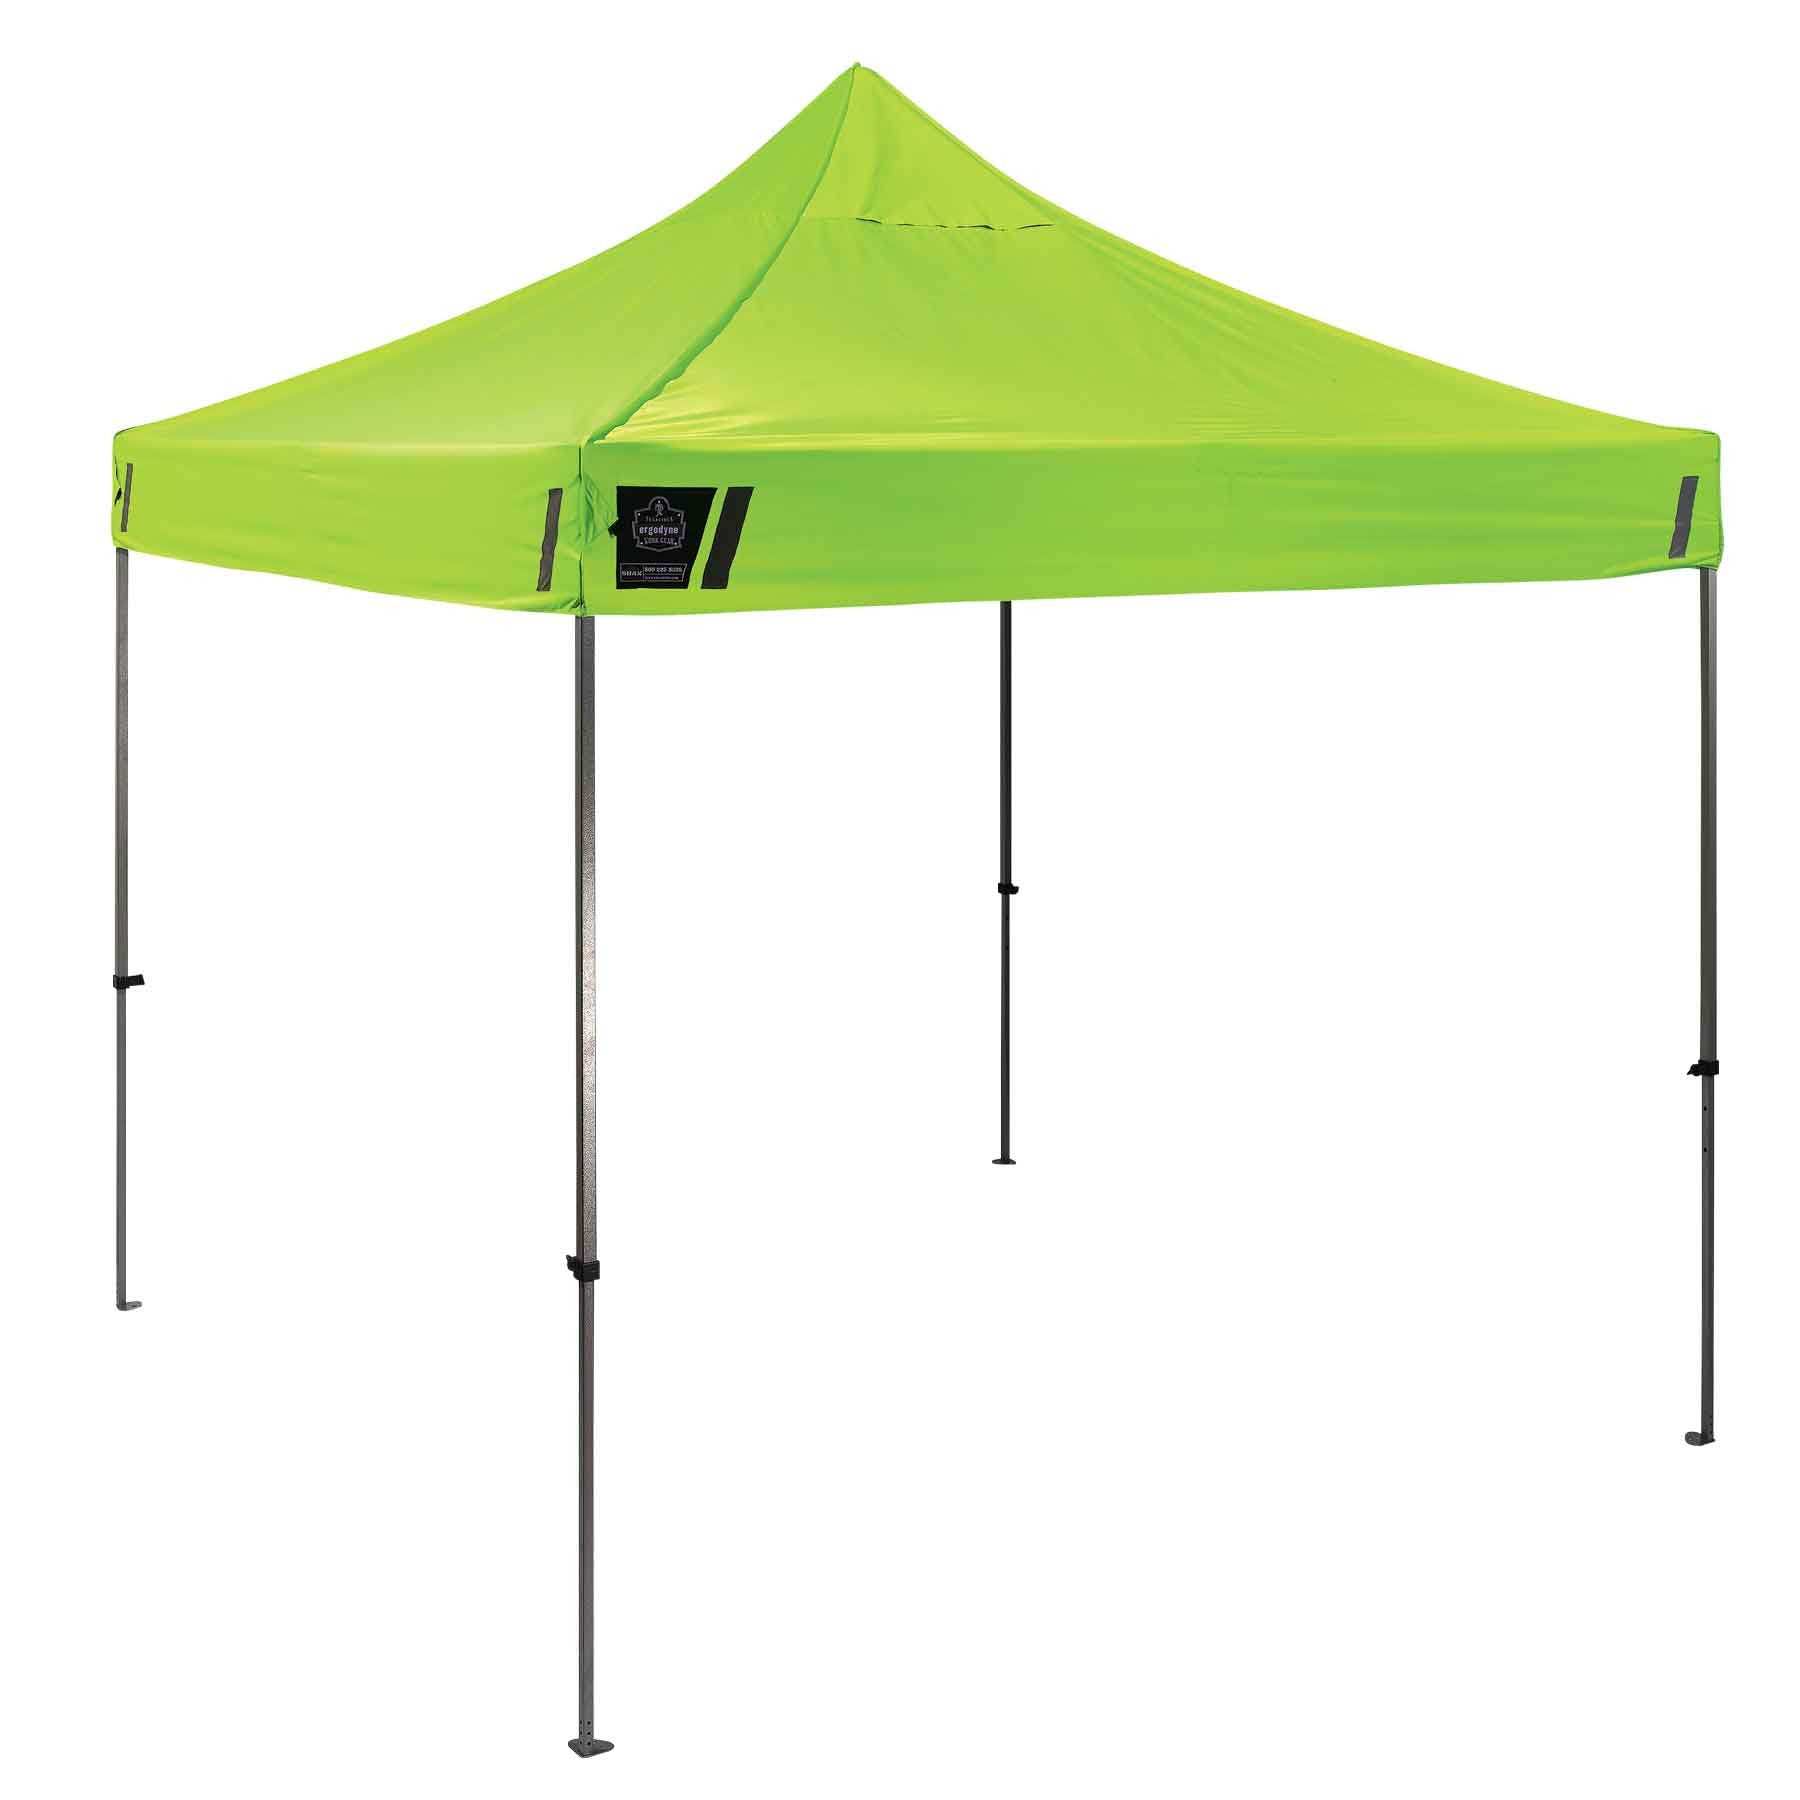 Ergodyne SHAX 6000 Heavy-Duty Commercial Pop-Up Tent